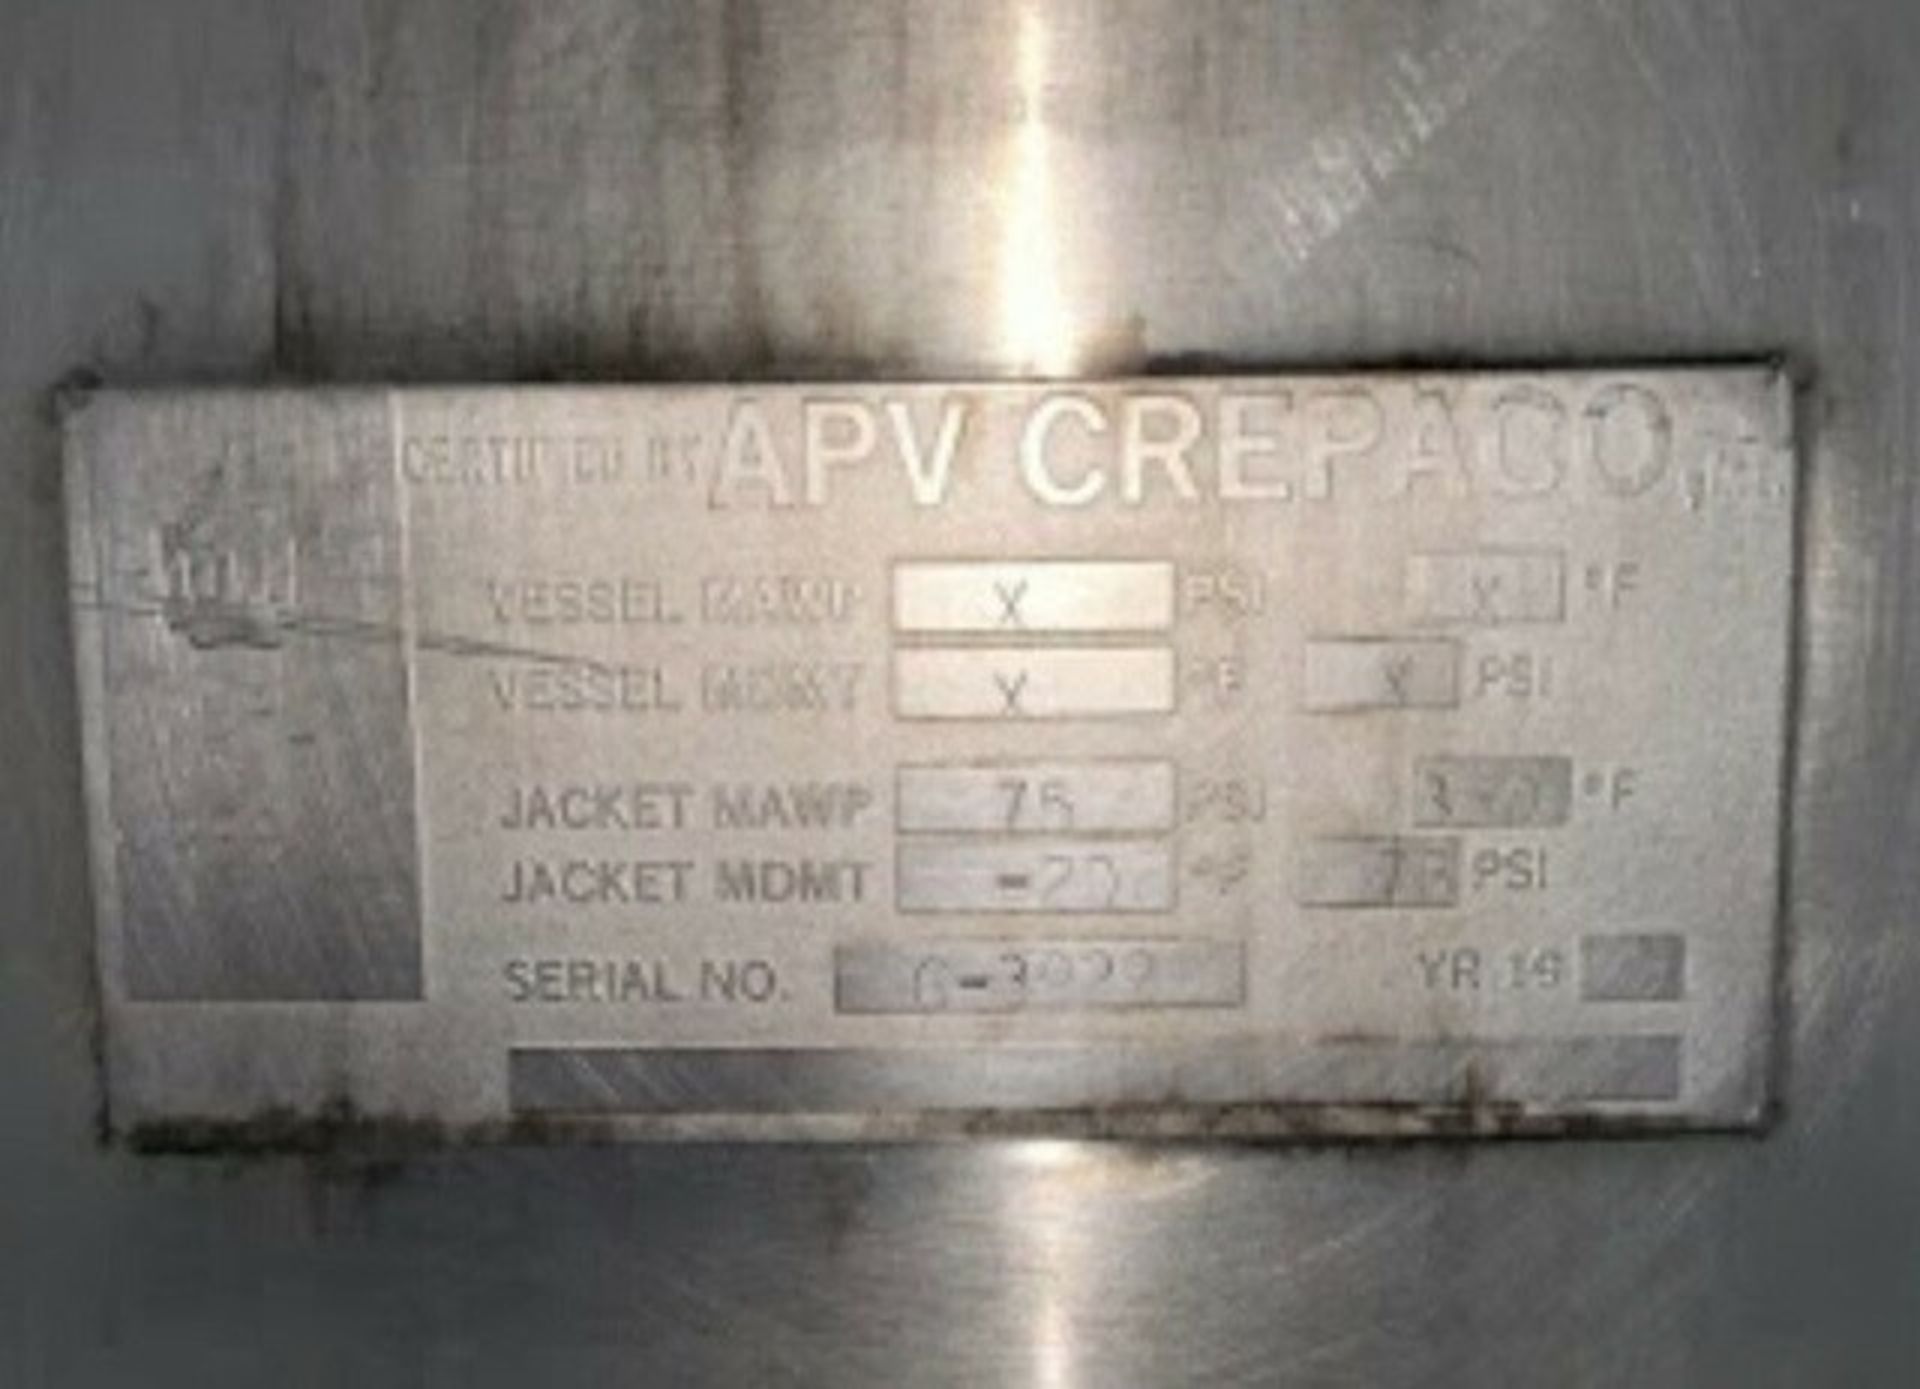 APV Crepaco 300 Gal. Jacketed Mix Tank, Max.75 psi - 350 Degree F Max. Temp., 14" Impeller - 2-3/ - Image 5 of 5